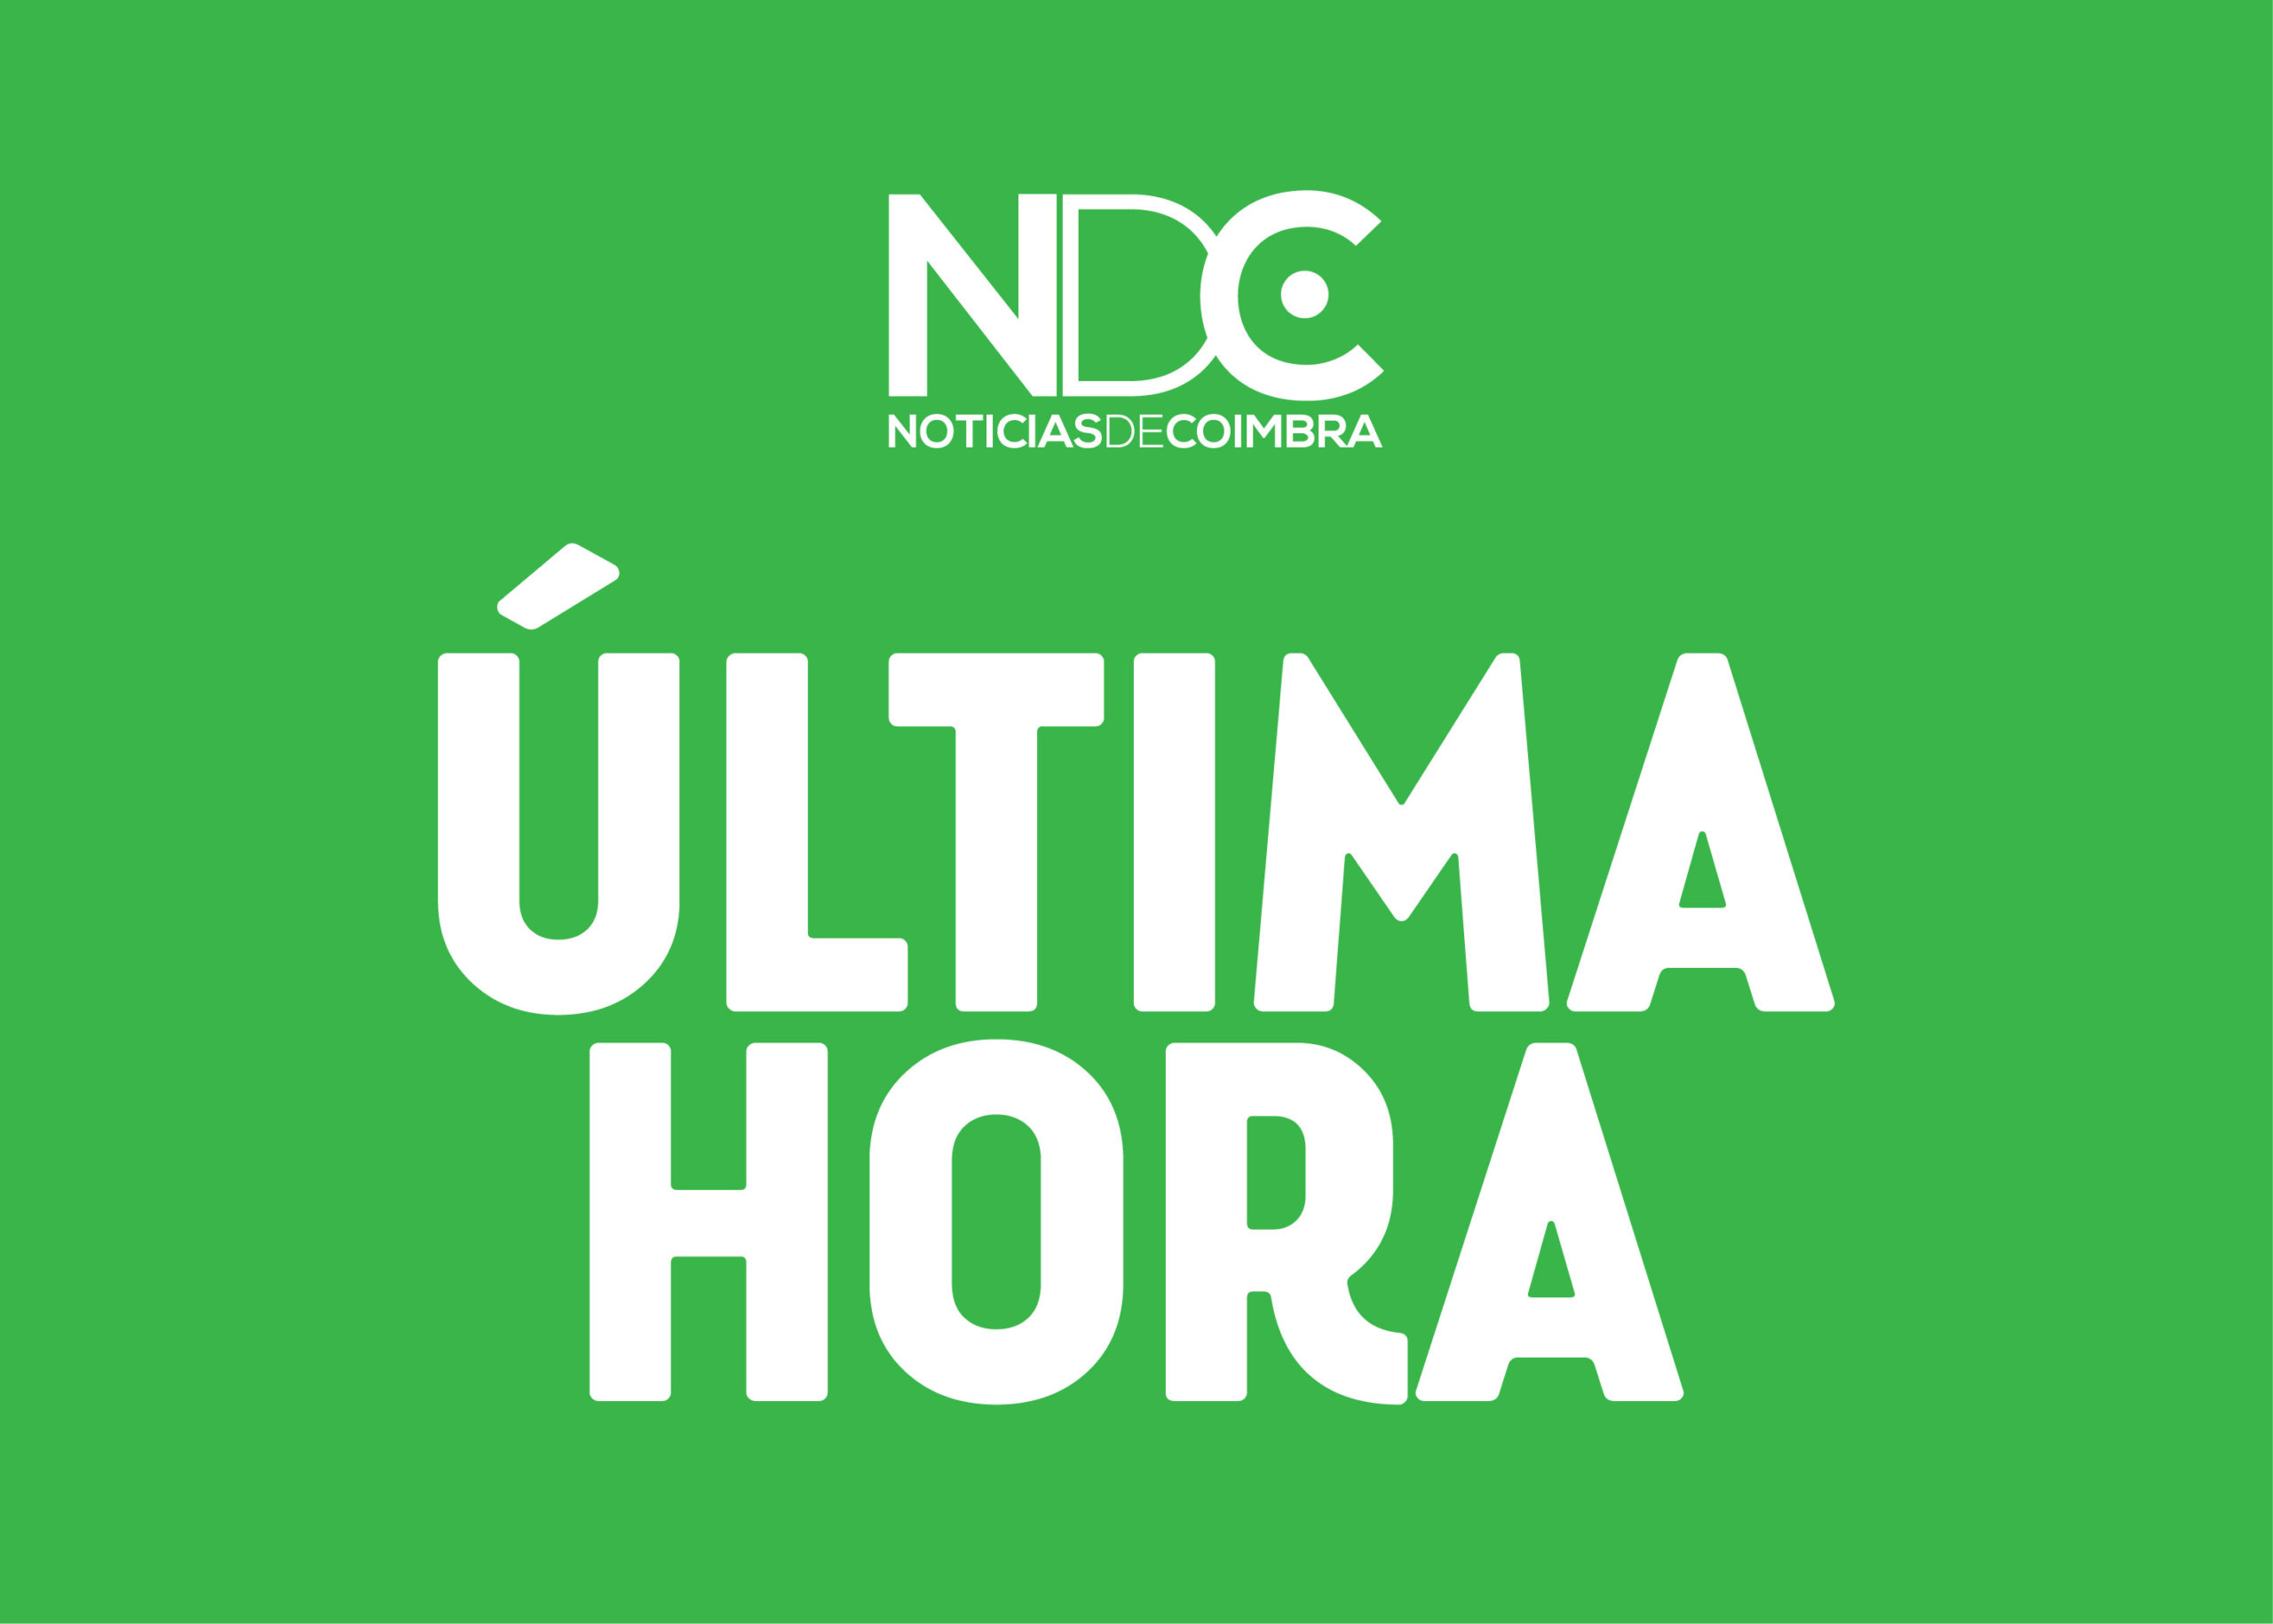 https://www.noticiasdecoimbra.pt/wp-content/uploads/2020/05/ultima-hora-ndc-scaled.jpg